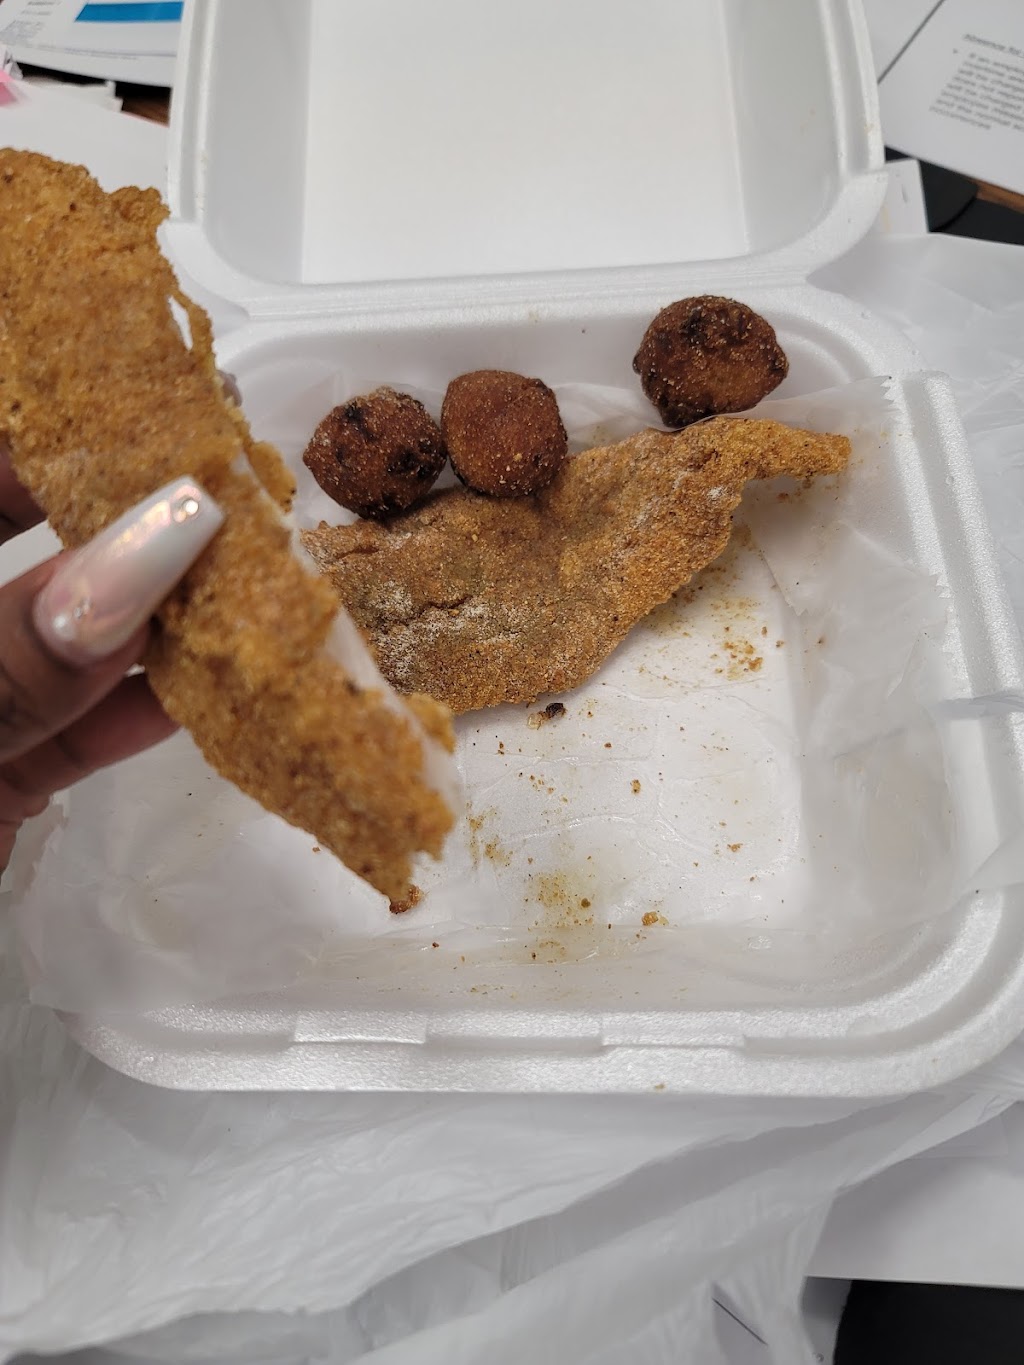 Crispy Fish & Chicken | 4 E State St, Trenton, OH 45067, USA | Phone: (513) 468-4033